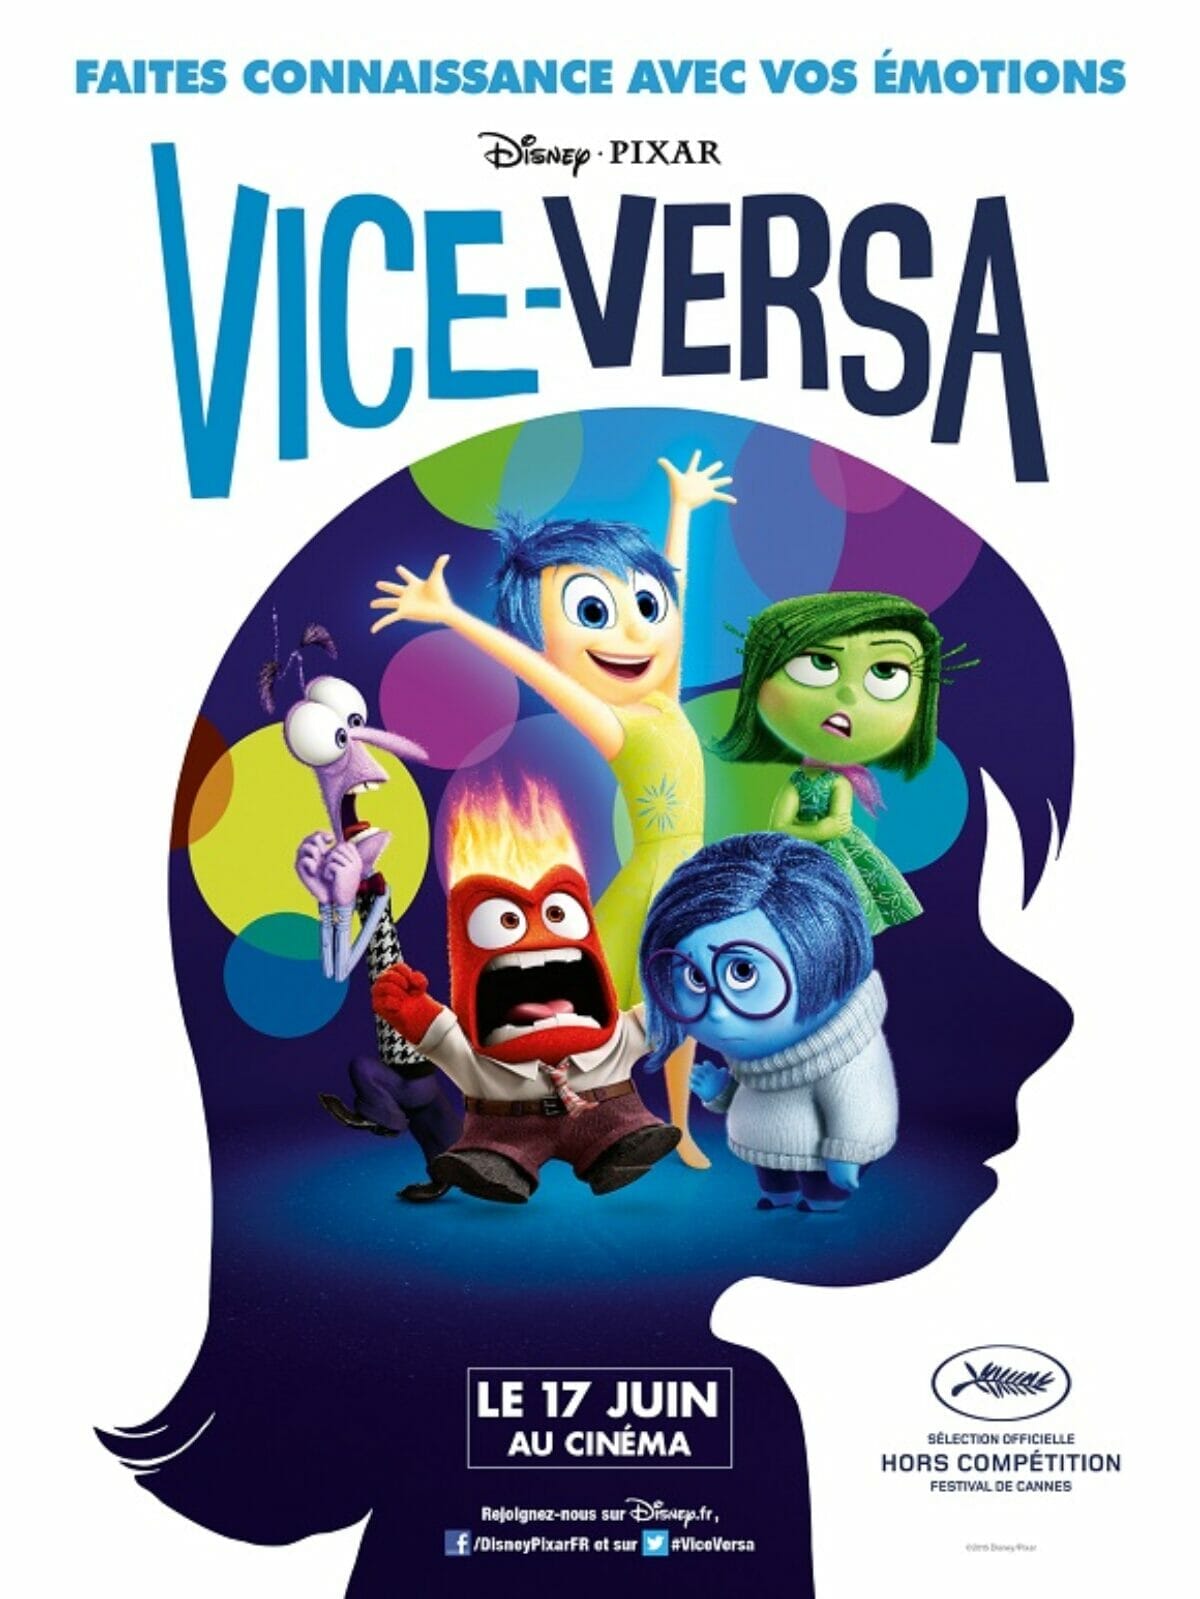 Vice-Versa-poster